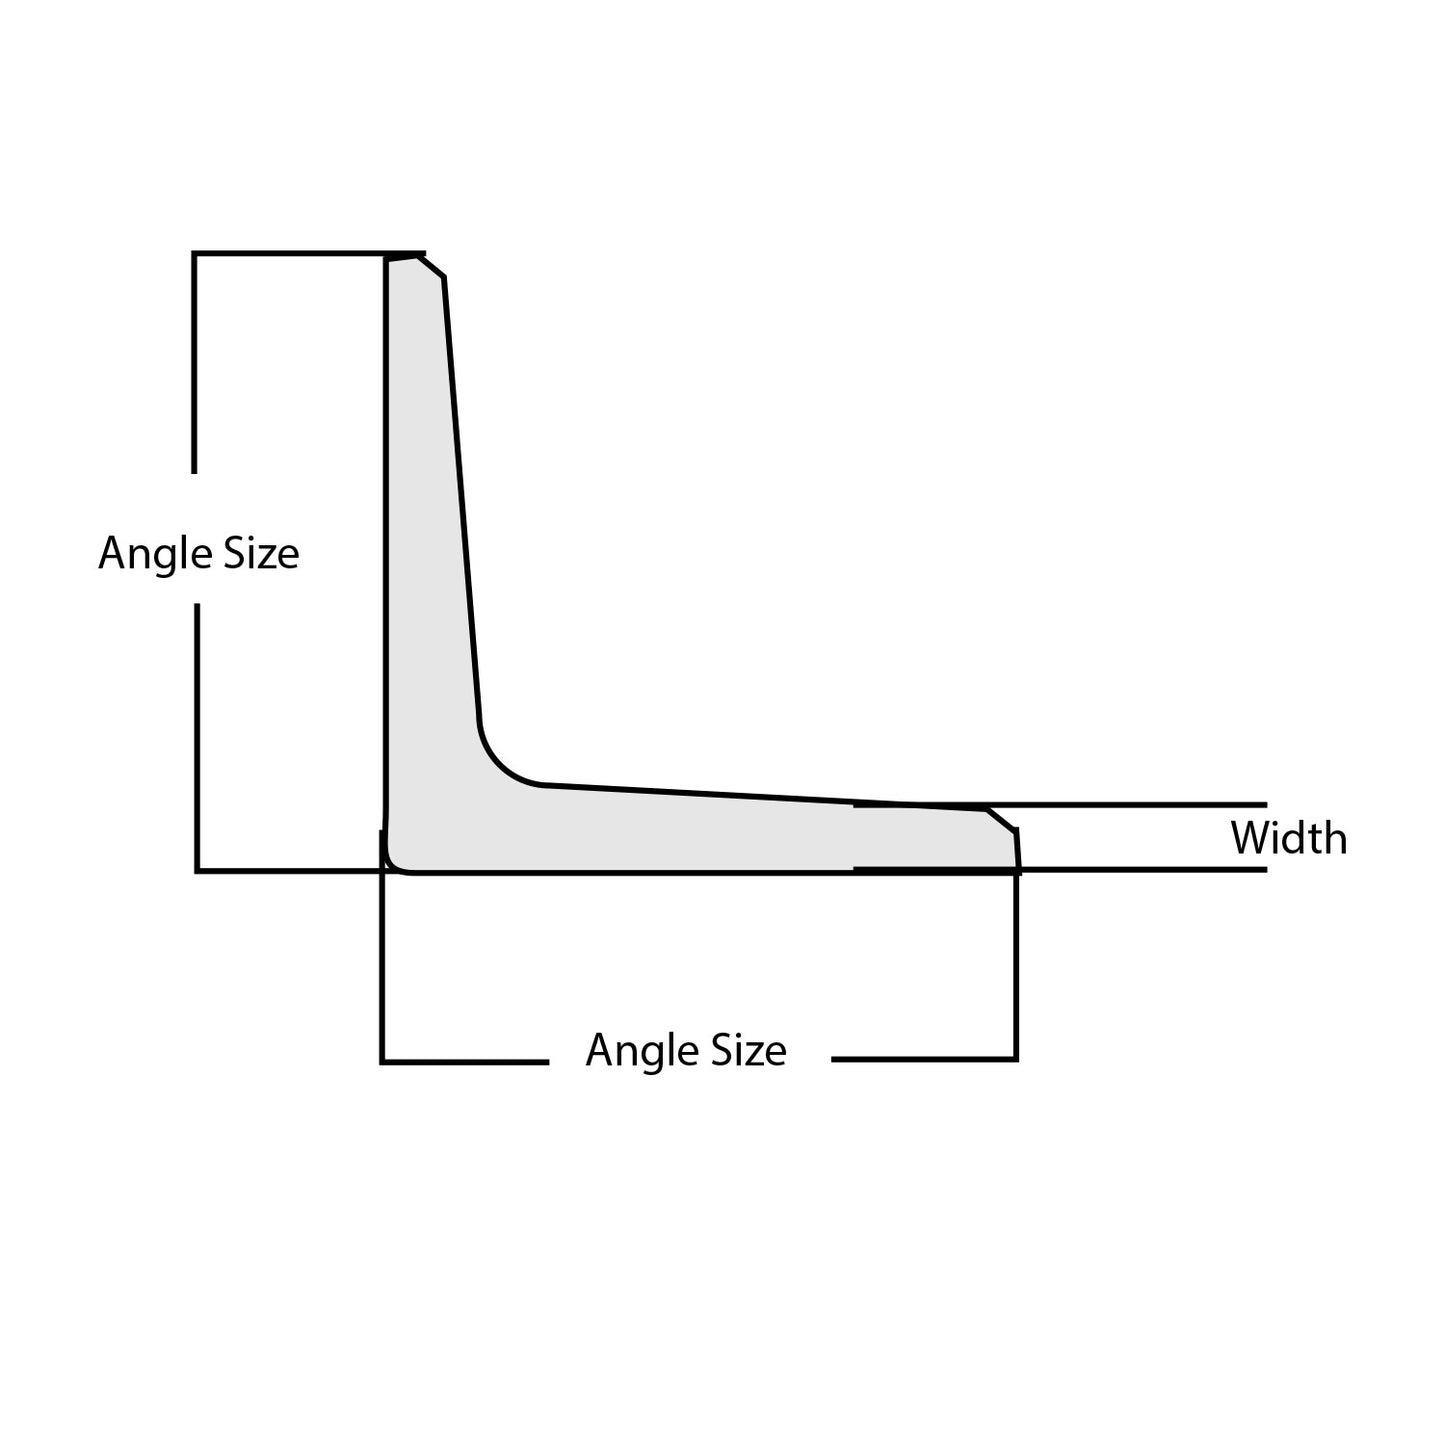 4" x 3" Aluminum Angle - Thickness 1/4